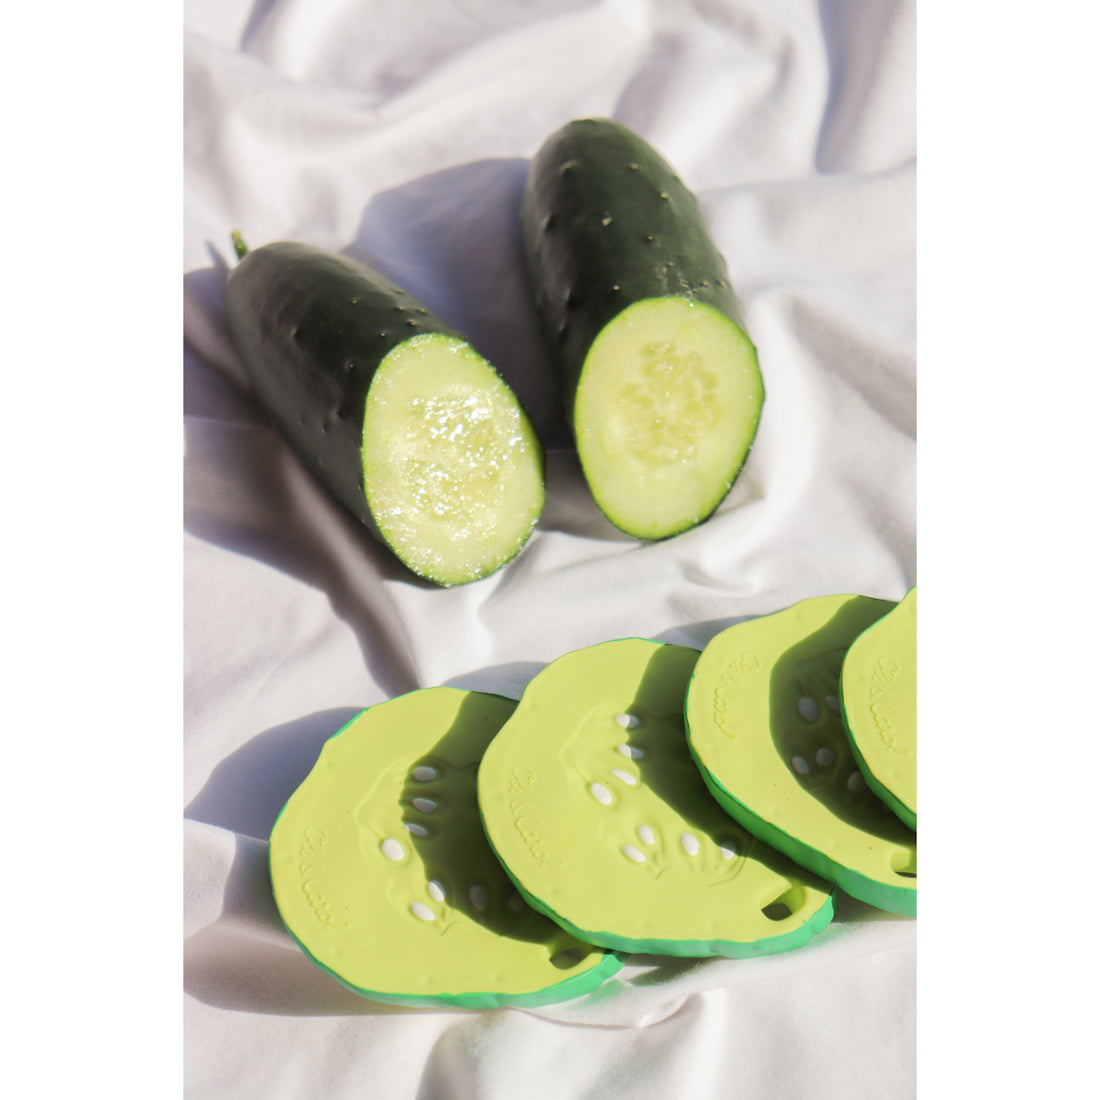 oli-&-carol-pepino-the-cucumber-teether-olic-l-cucumber-unit (5)